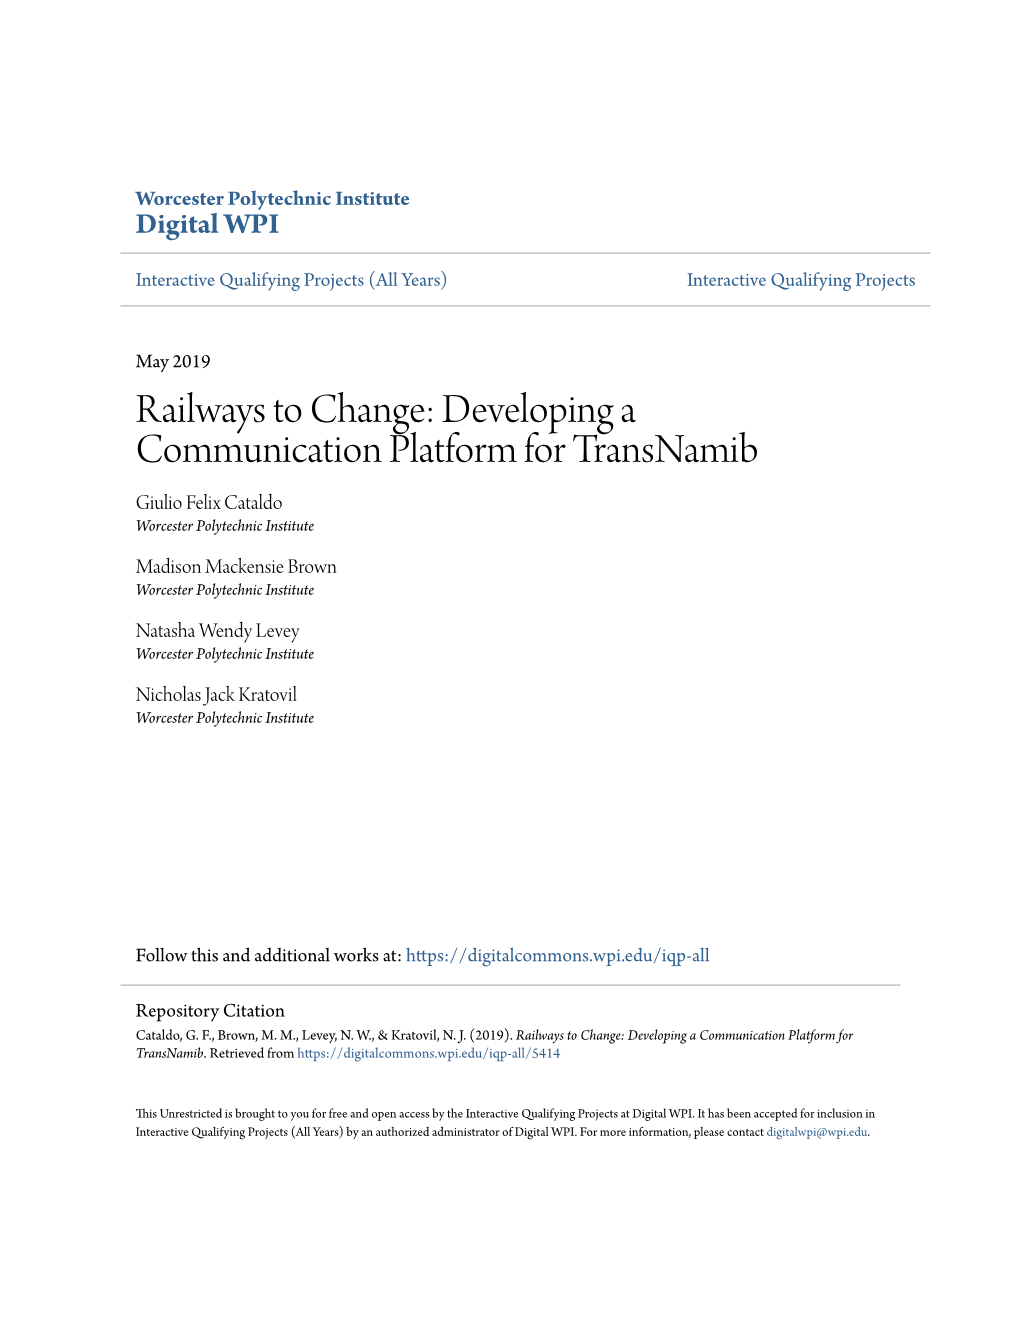 Railways to Change: Developing a Communication Platform for Transnamib Giulio Felix Cataldo Worcester Polytechnic Institute